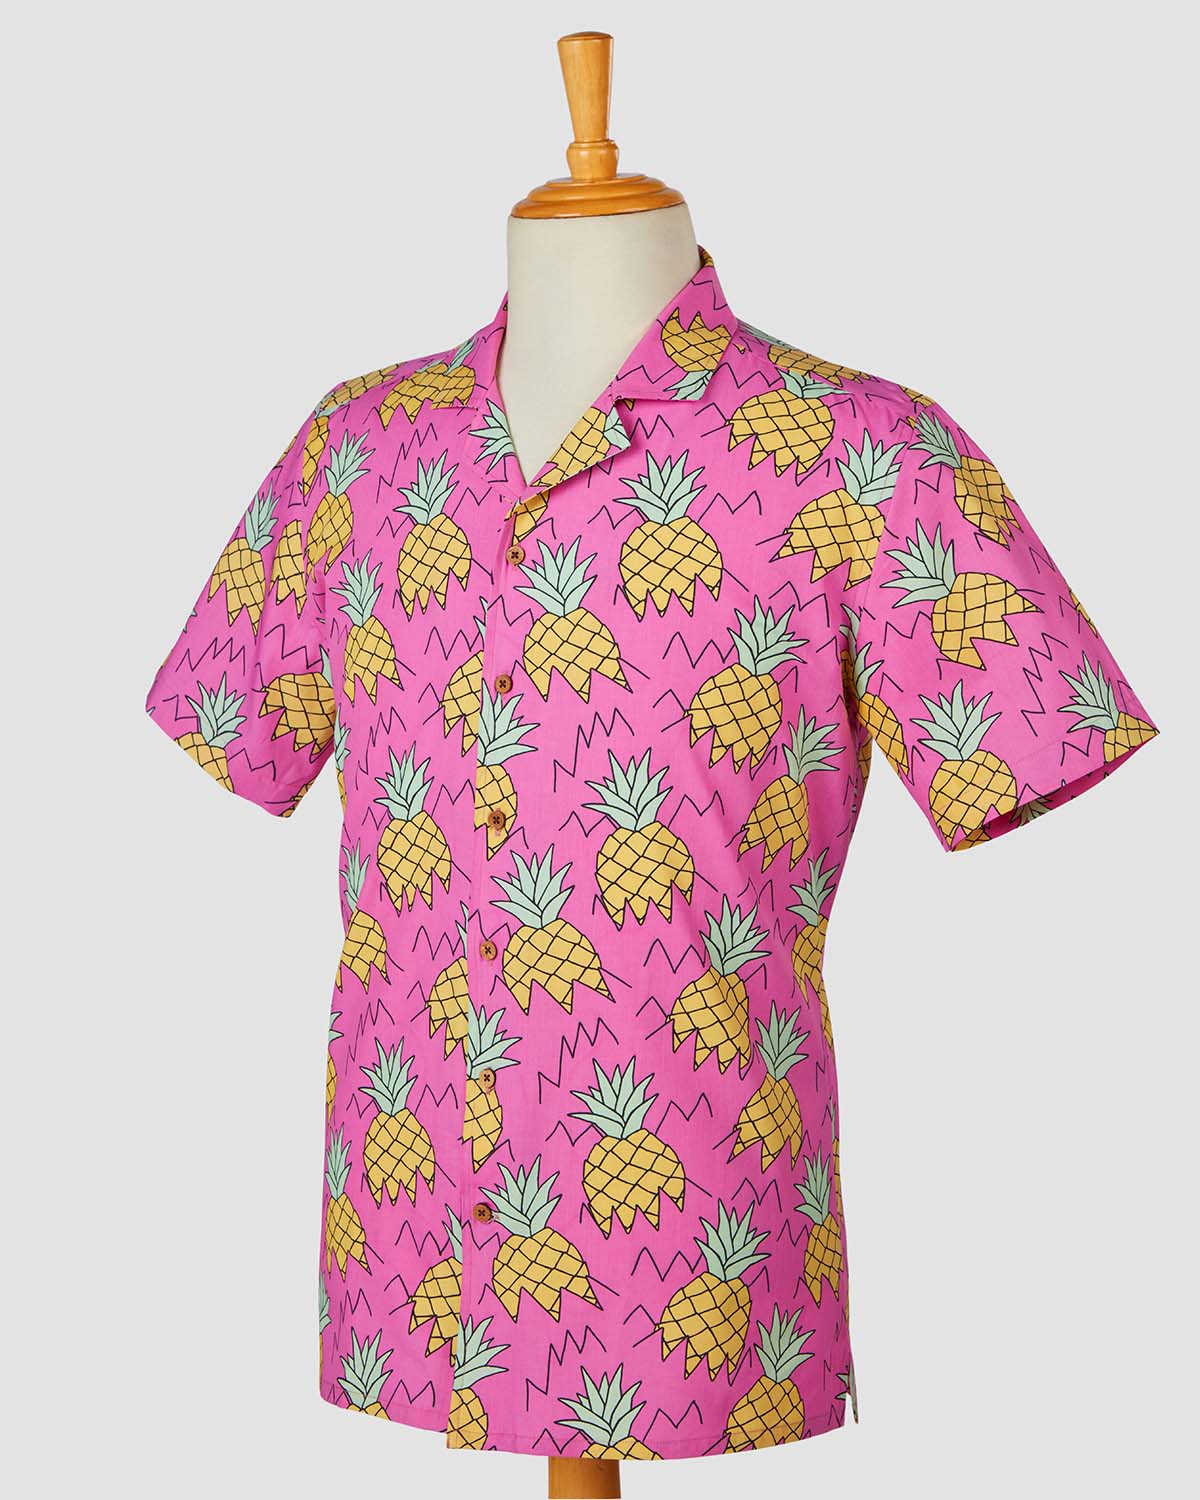 Bombay Shirt Company - Aloha Pineapple Shirt